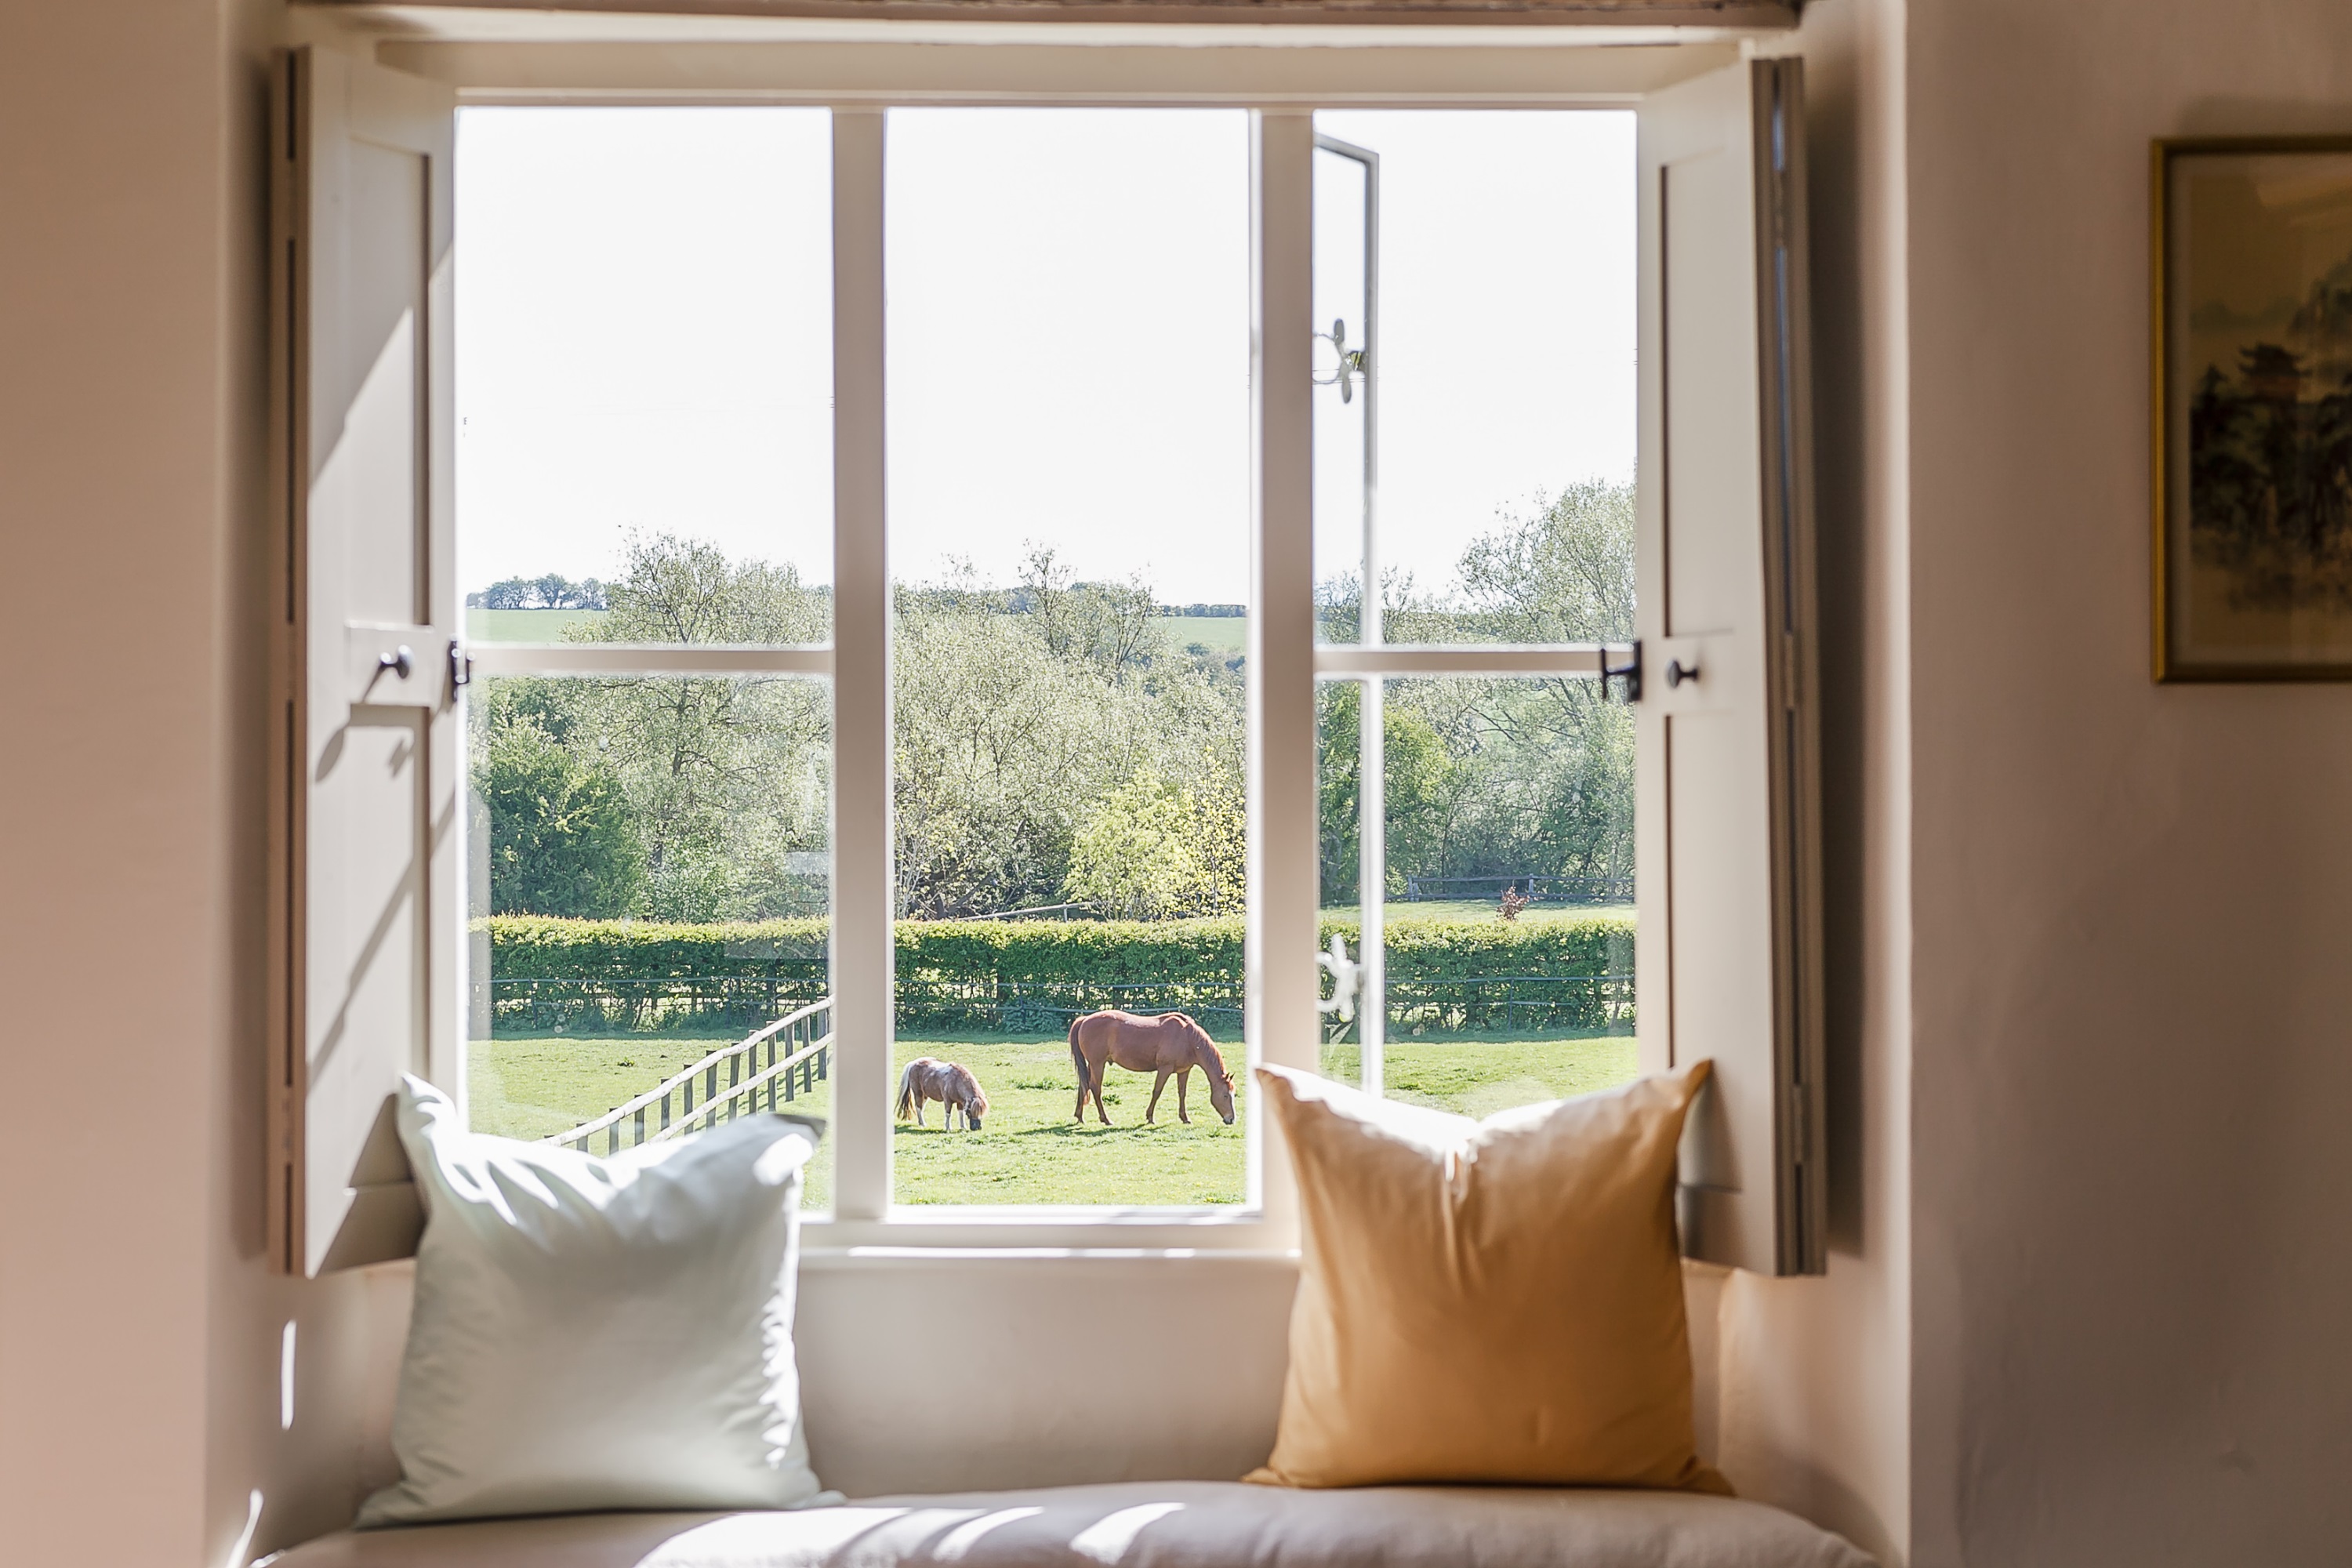 equestrian property view through window